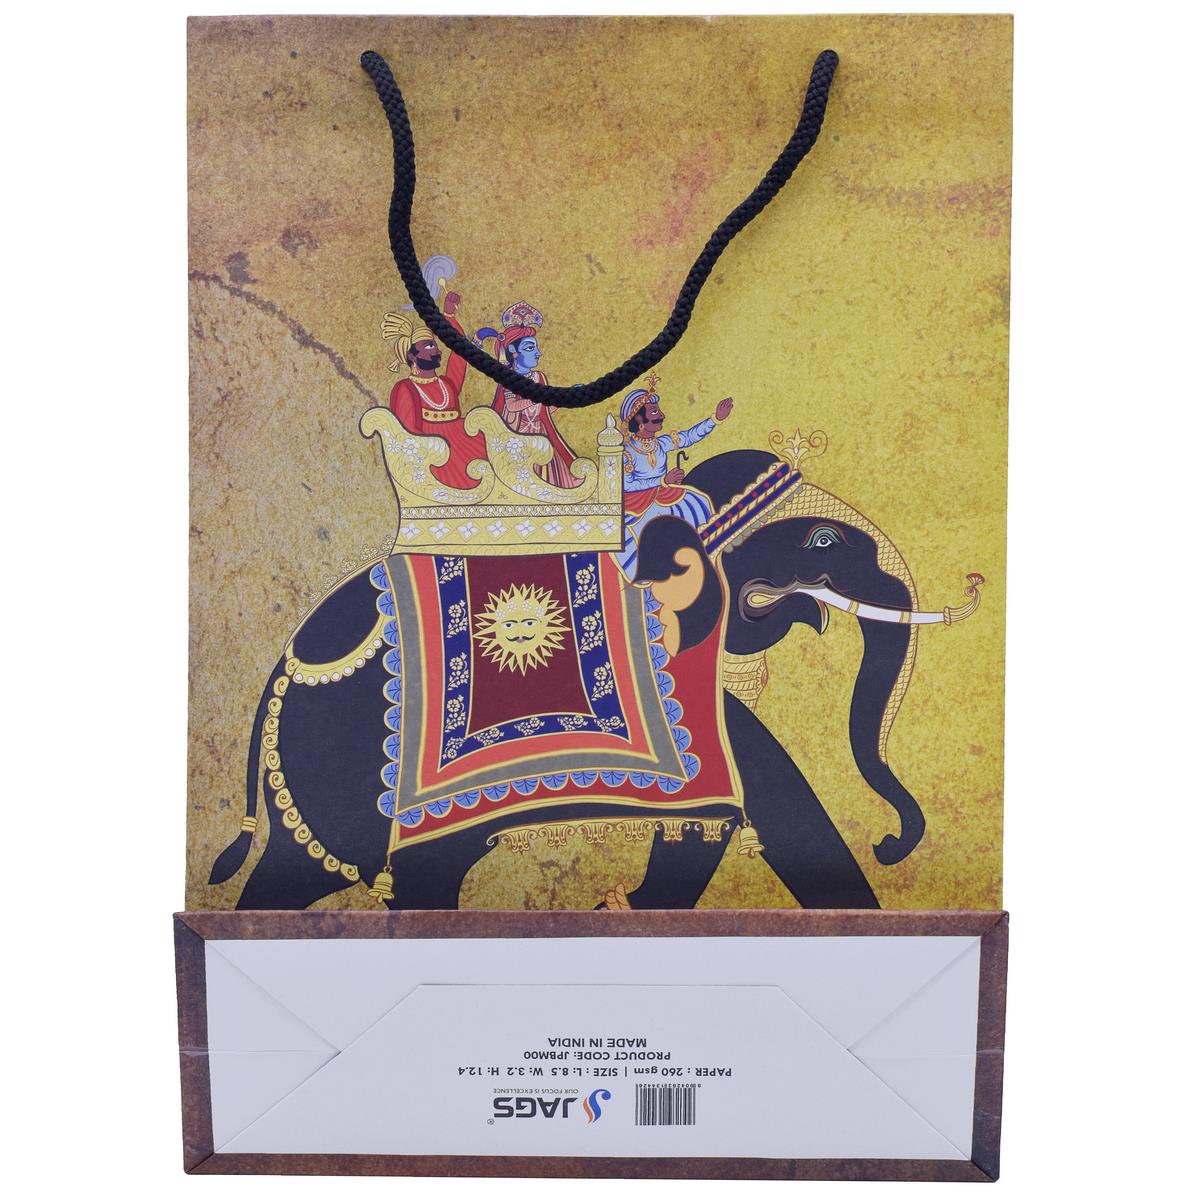 jags-mumbai Bag Jags Paper Bag Medium Decorated Elephant A4 JPBM00 (Contain 1 Unit2)